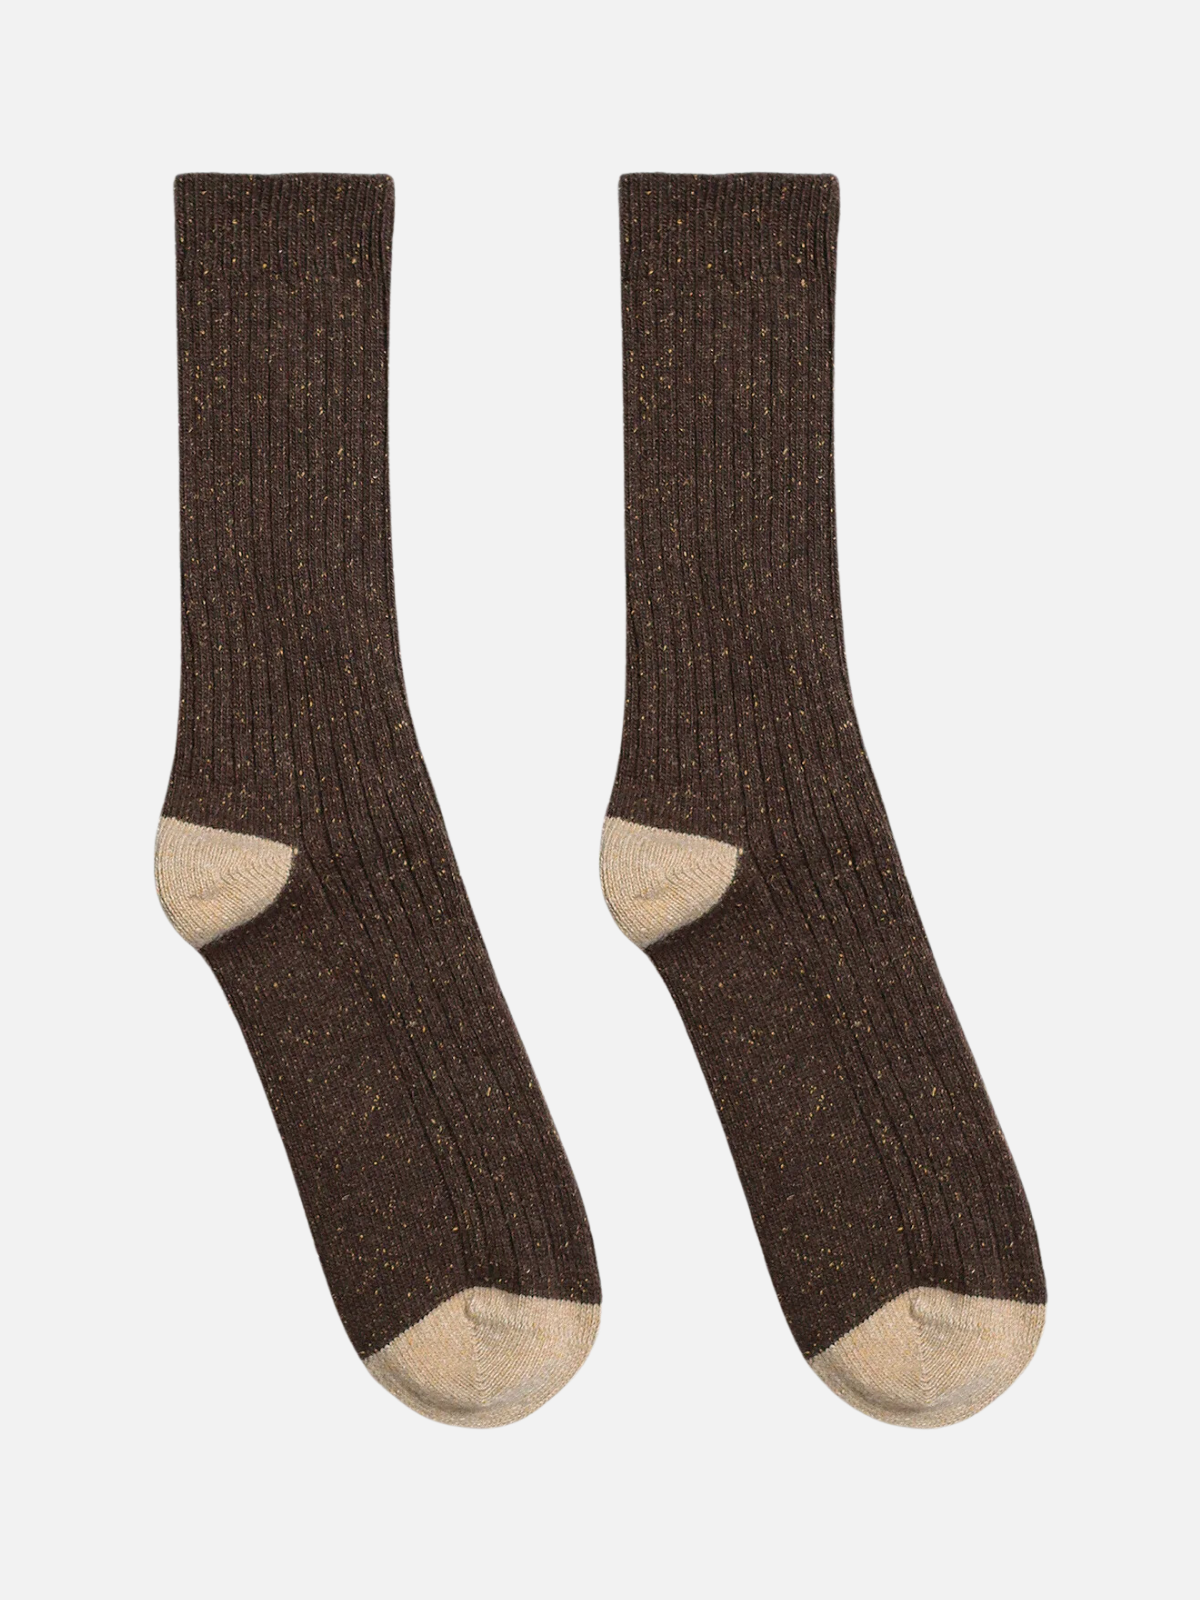 far afield neppy wool hiking socks slate brown tan rubbed cuff crew length kempt athens ga georgia men's clothing store